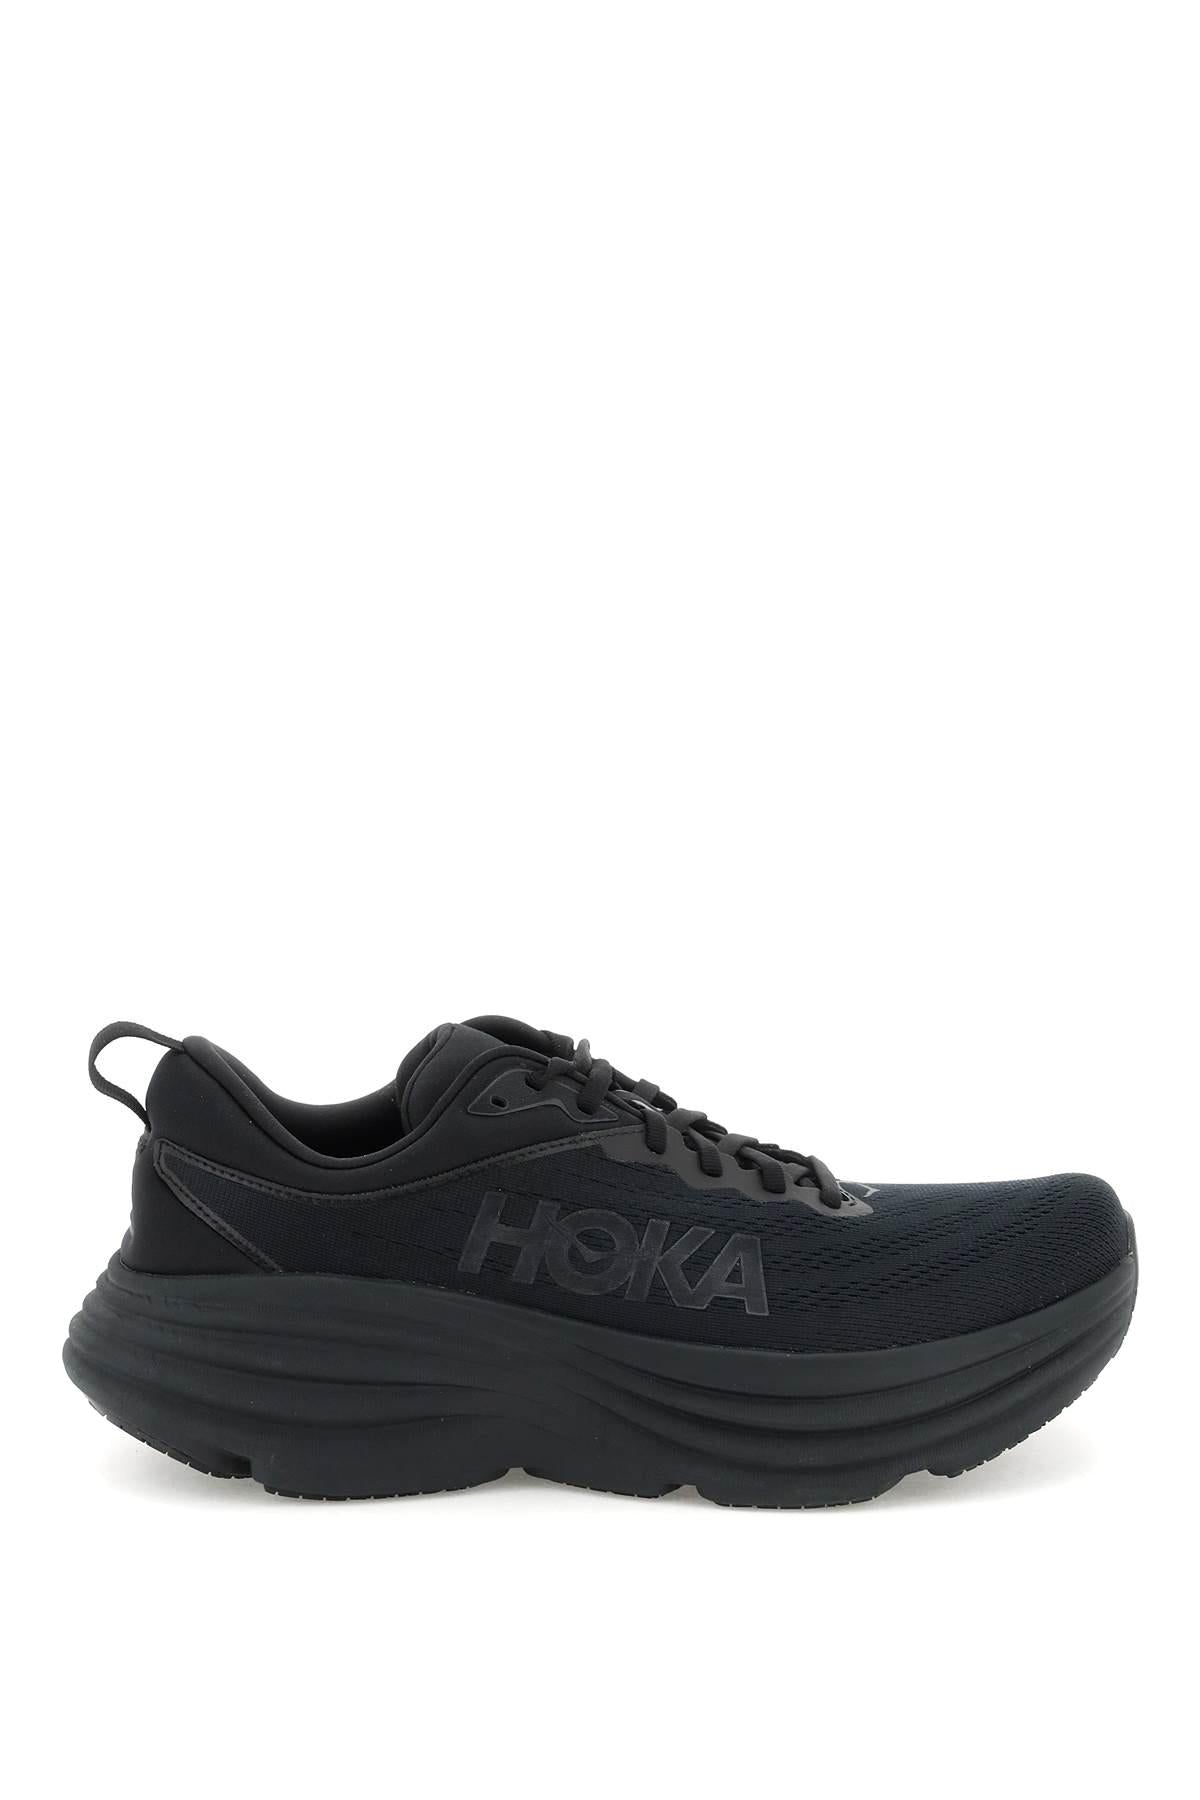 Shop Hoka 'bondi ' Sneakers